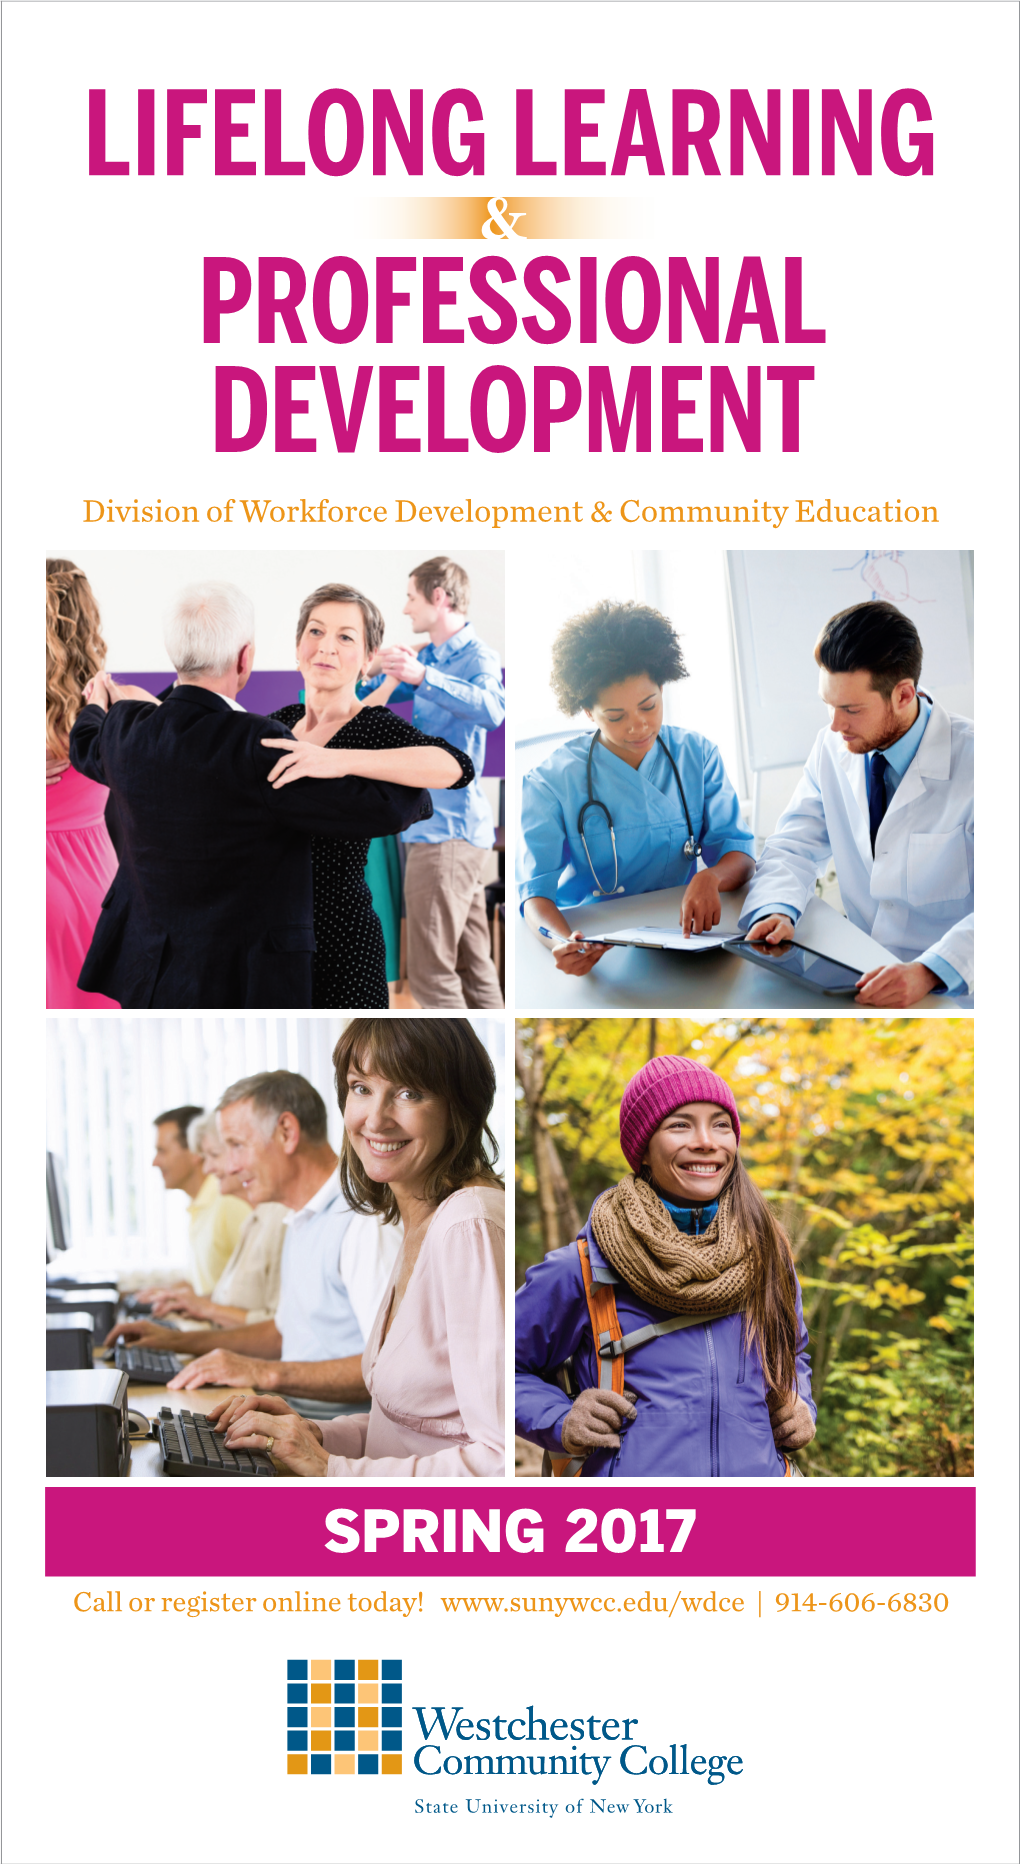 Professional Development Lifelong Learning